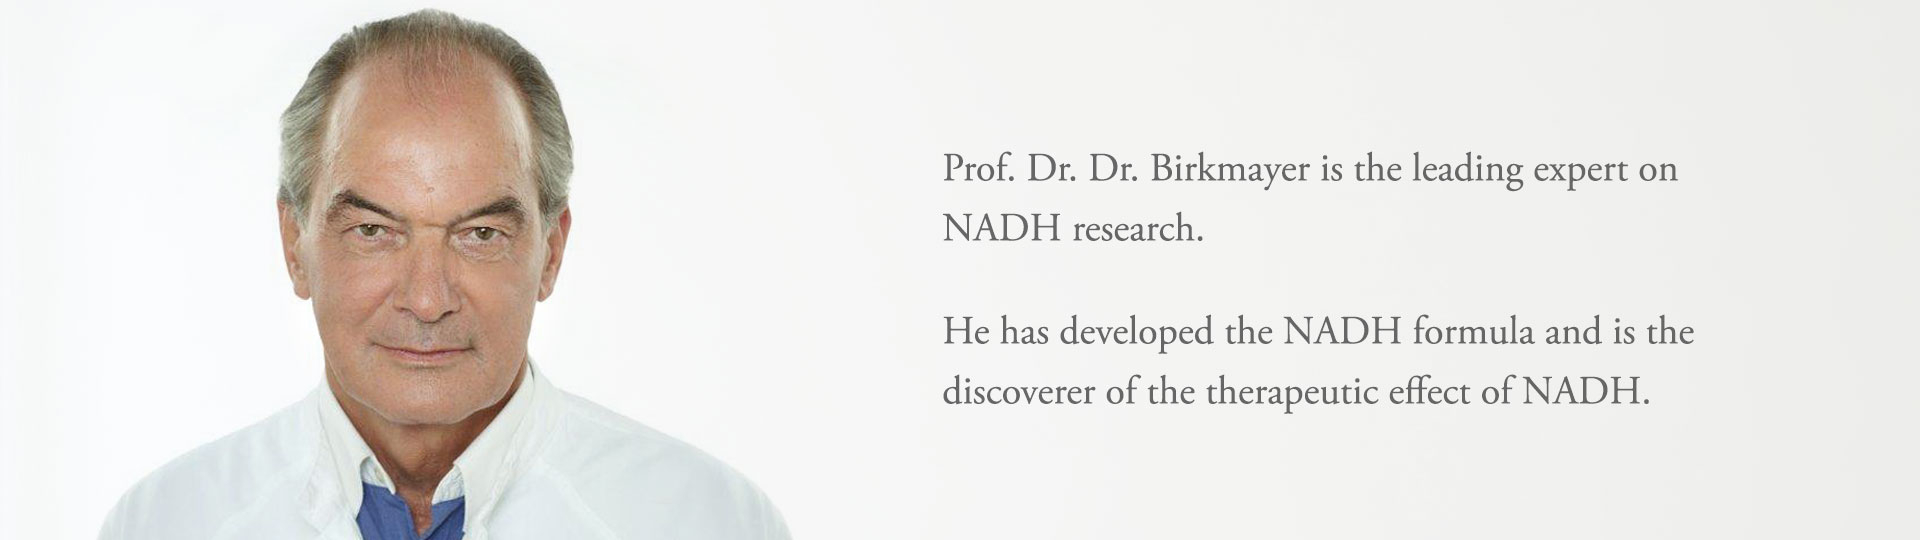 Prof. George Birkmayer NADH.